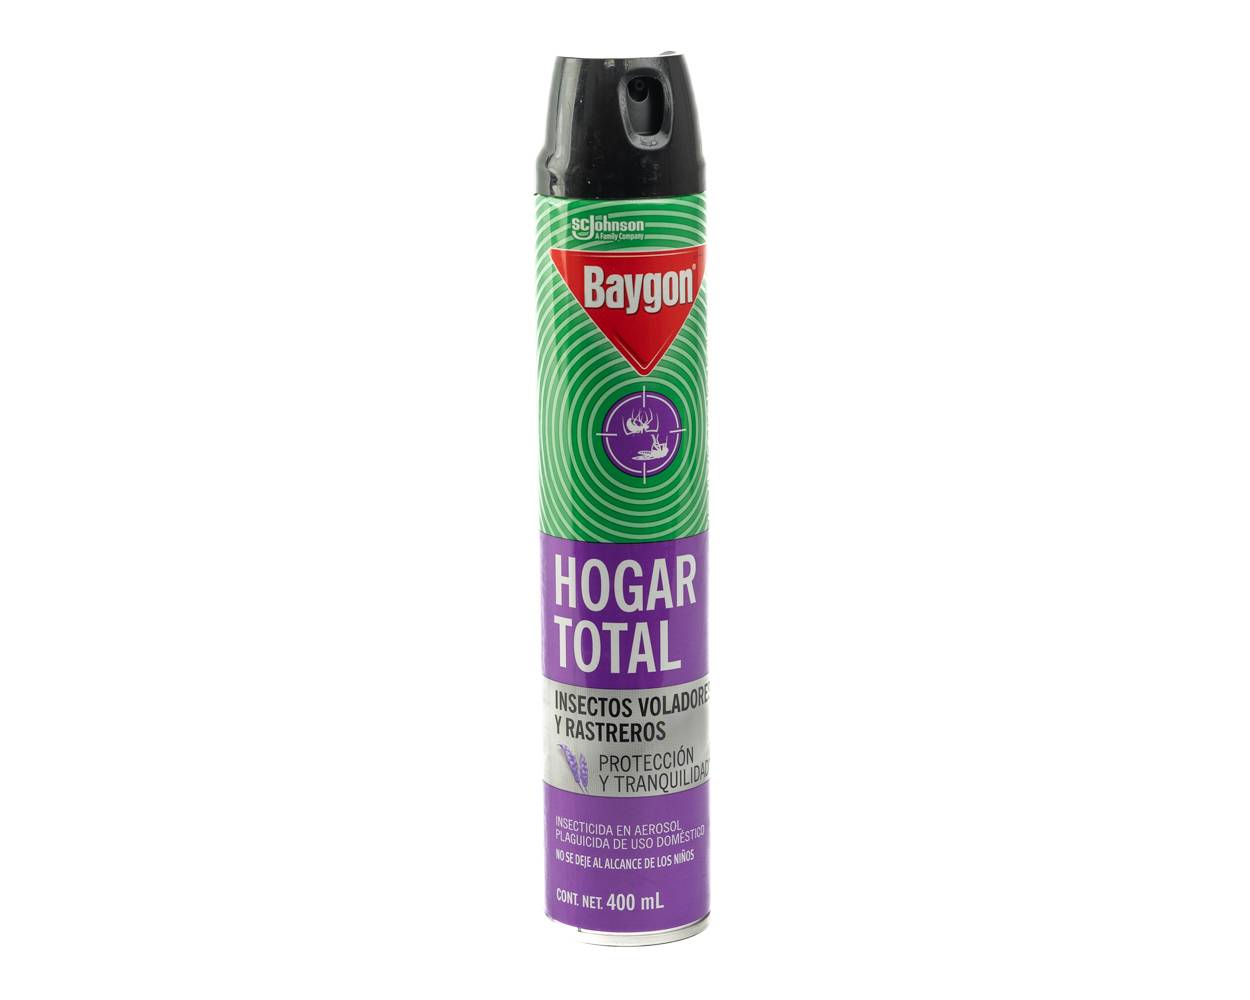 Baygon insecticida hogar total (spray 400 ml)